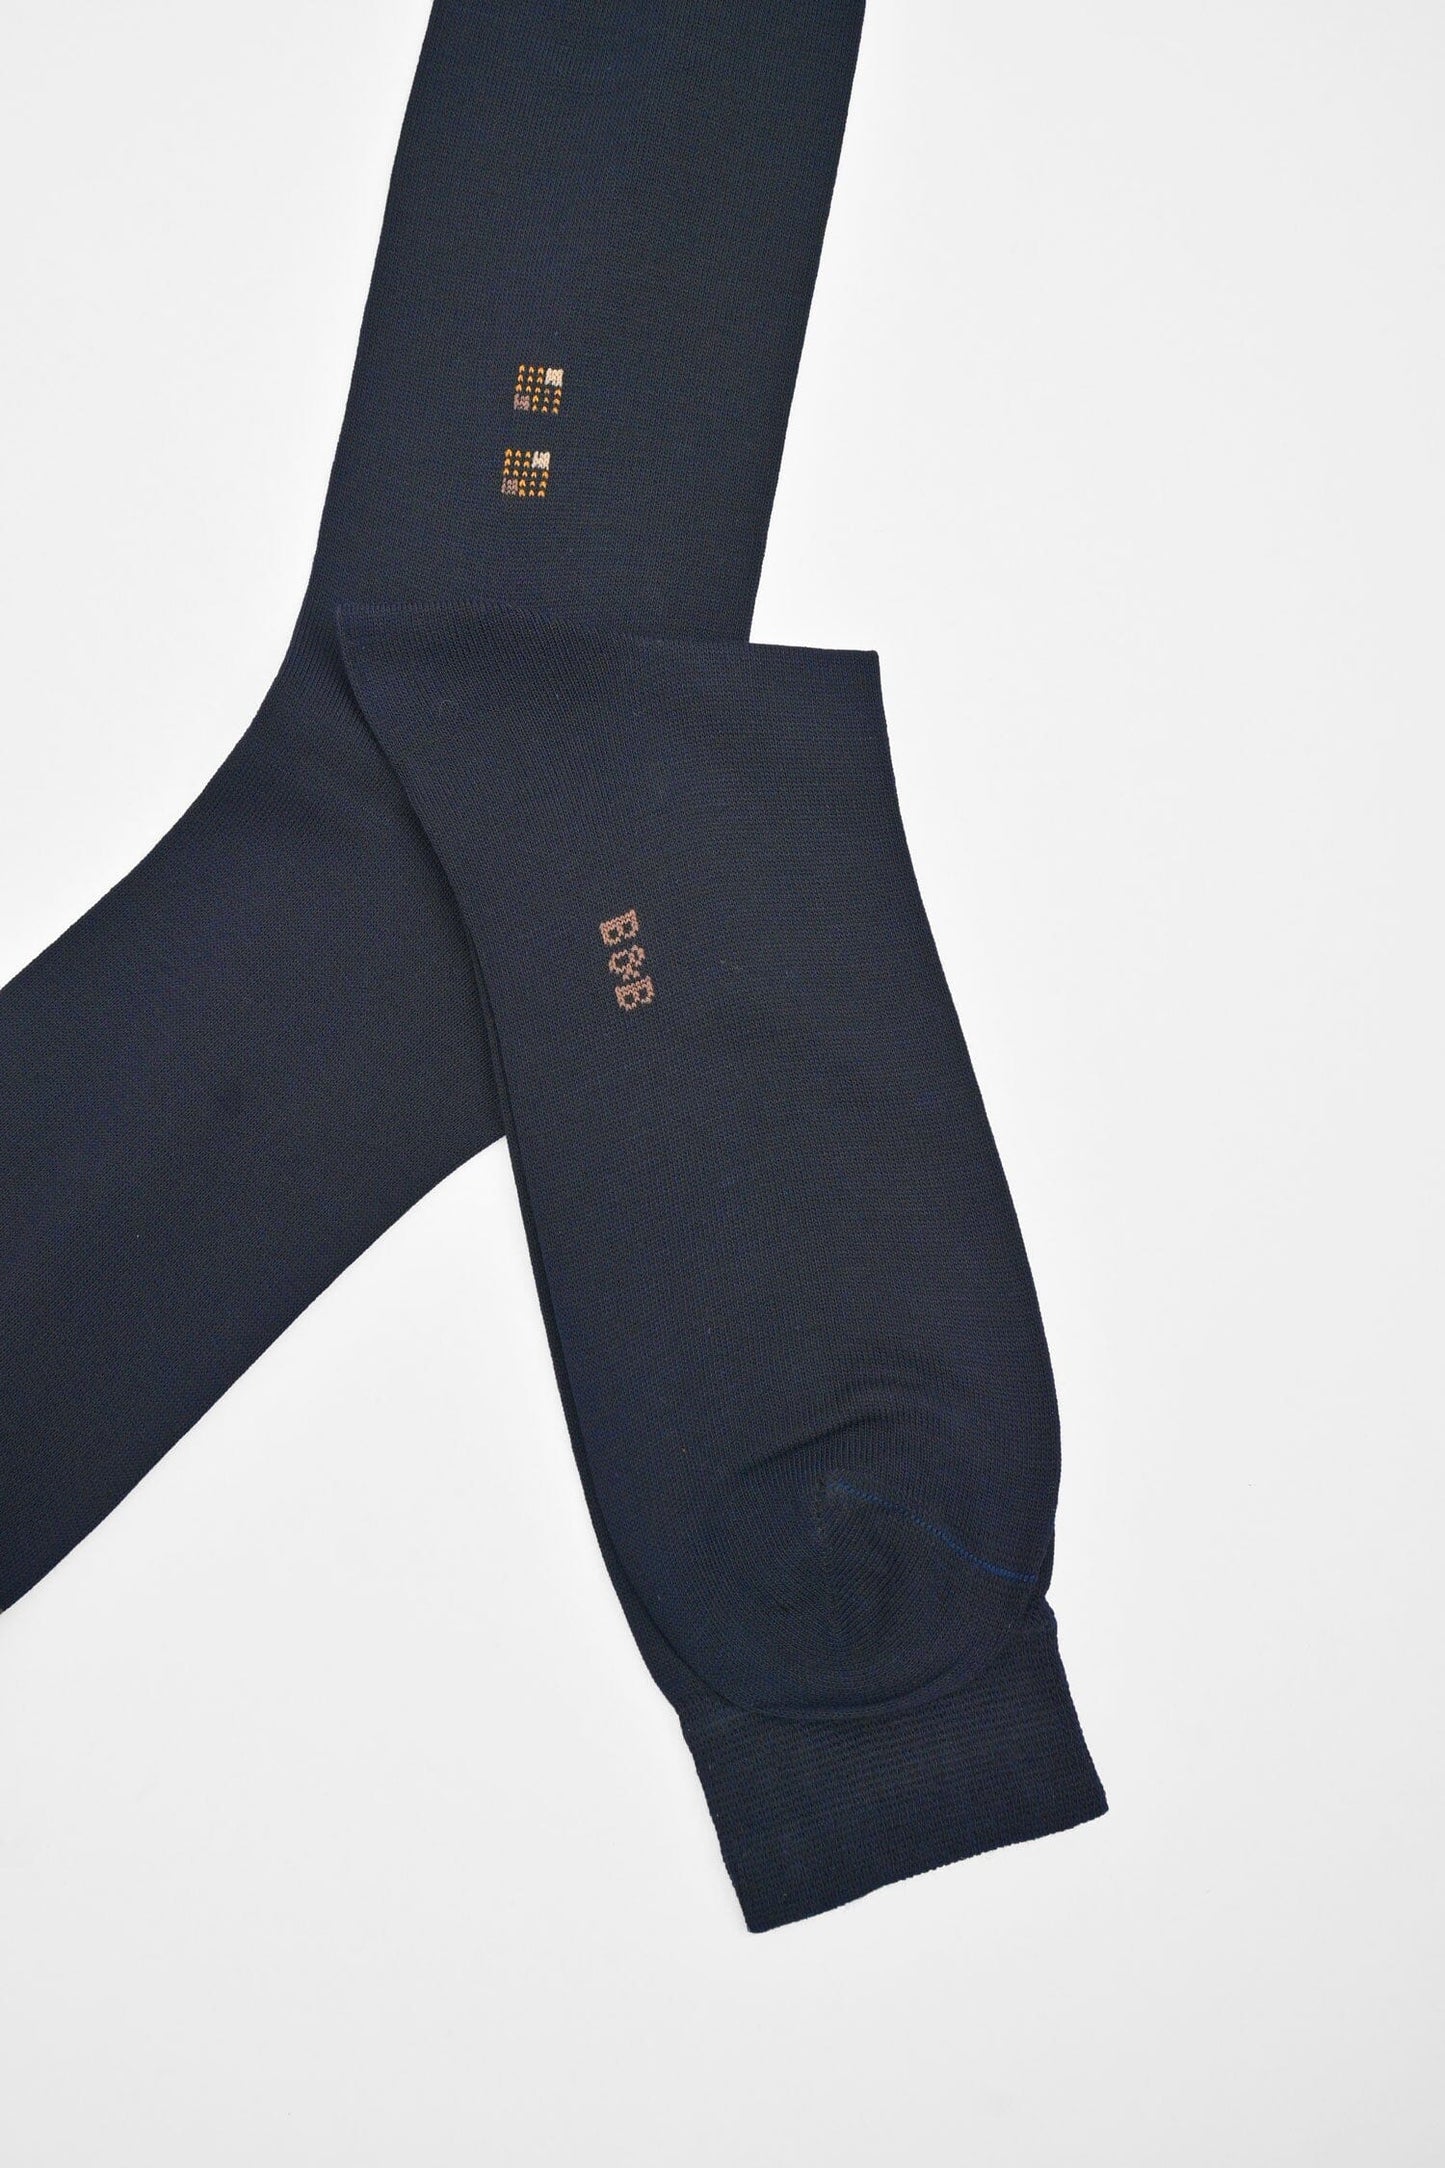 Gol Men's B&B Classic Cotton Dress Socks - Pack Of 2 Pairs